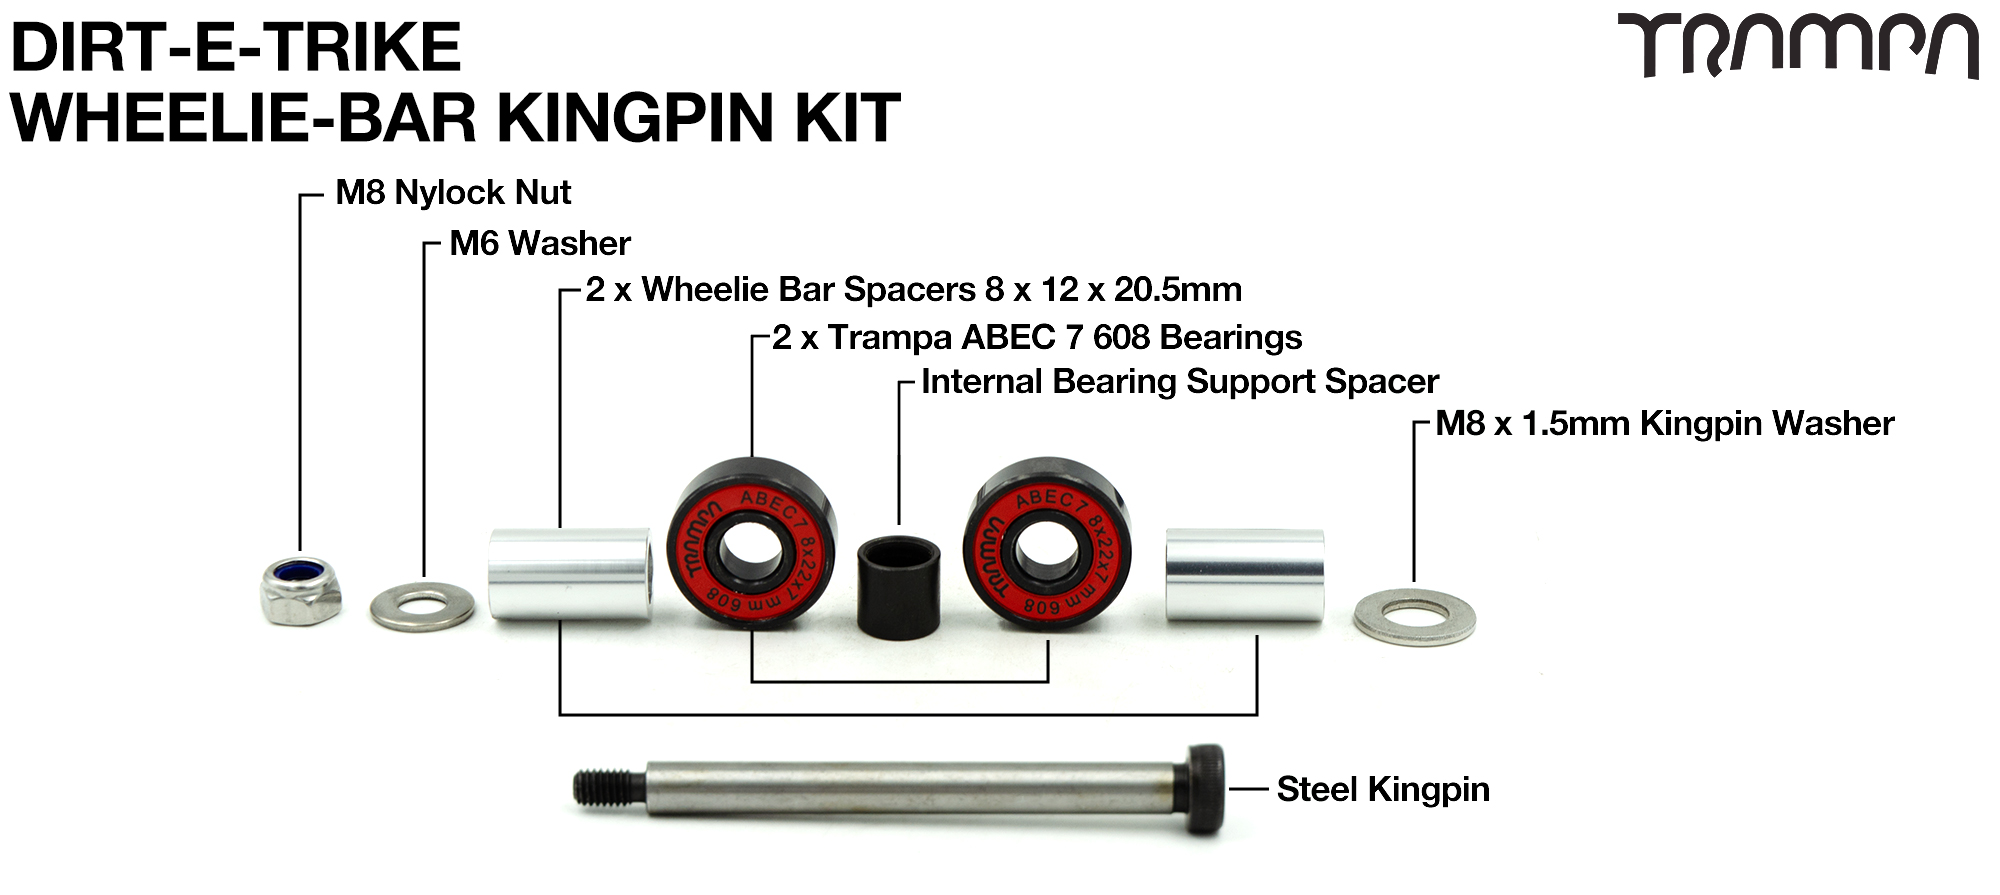 DIRT-E-TRIKE Wheelie-Bar Kingpin Kit